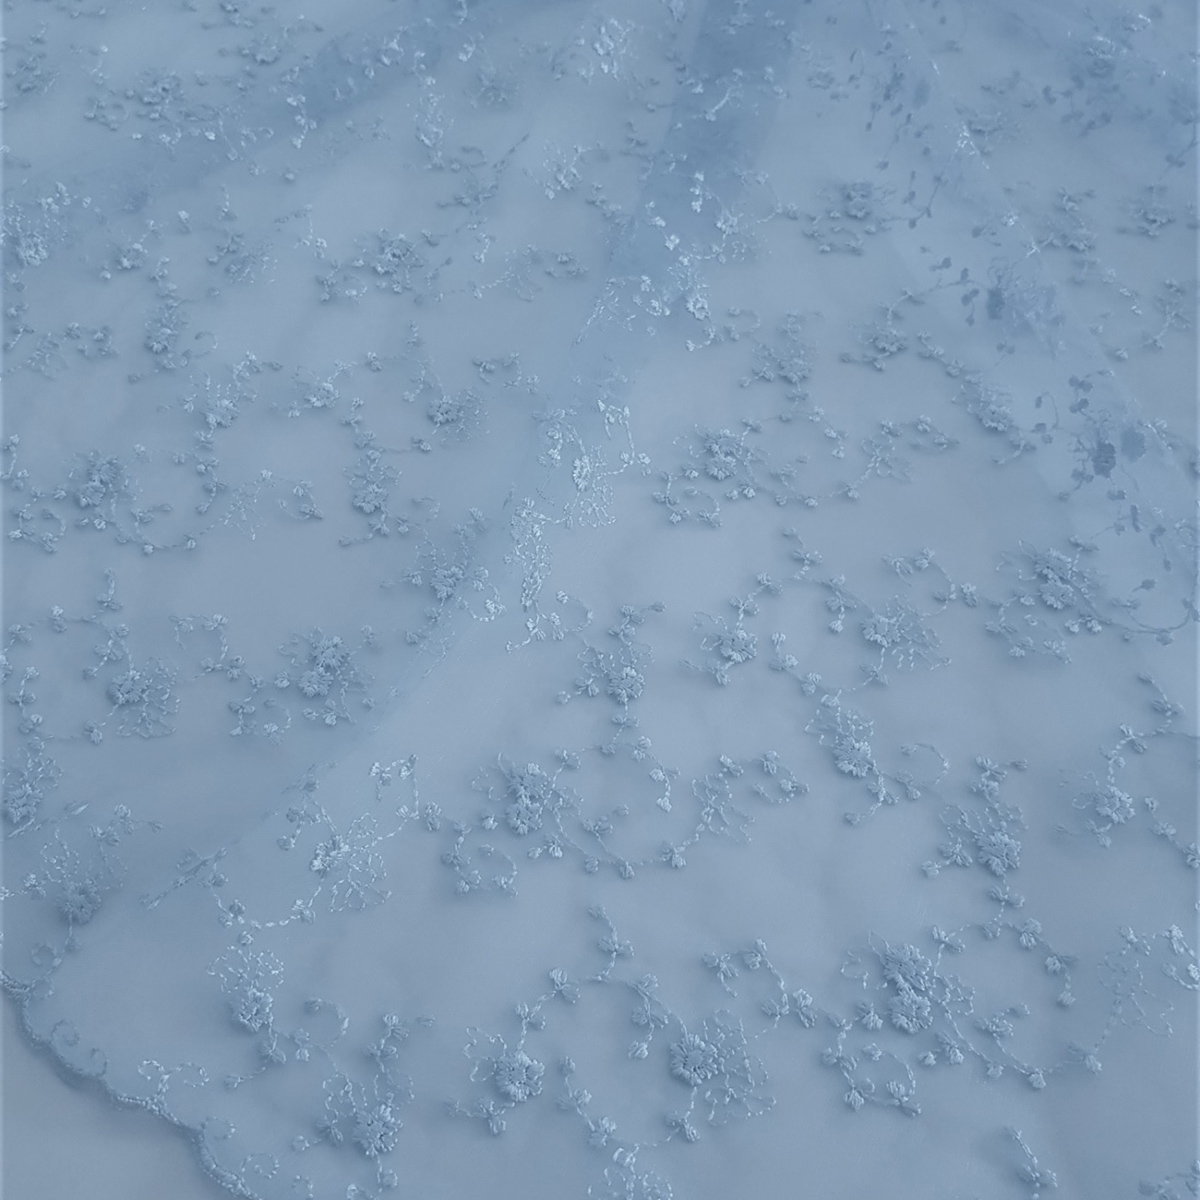 Tüllspitze rauch (blaugrau), 100% Polyester, 135cm